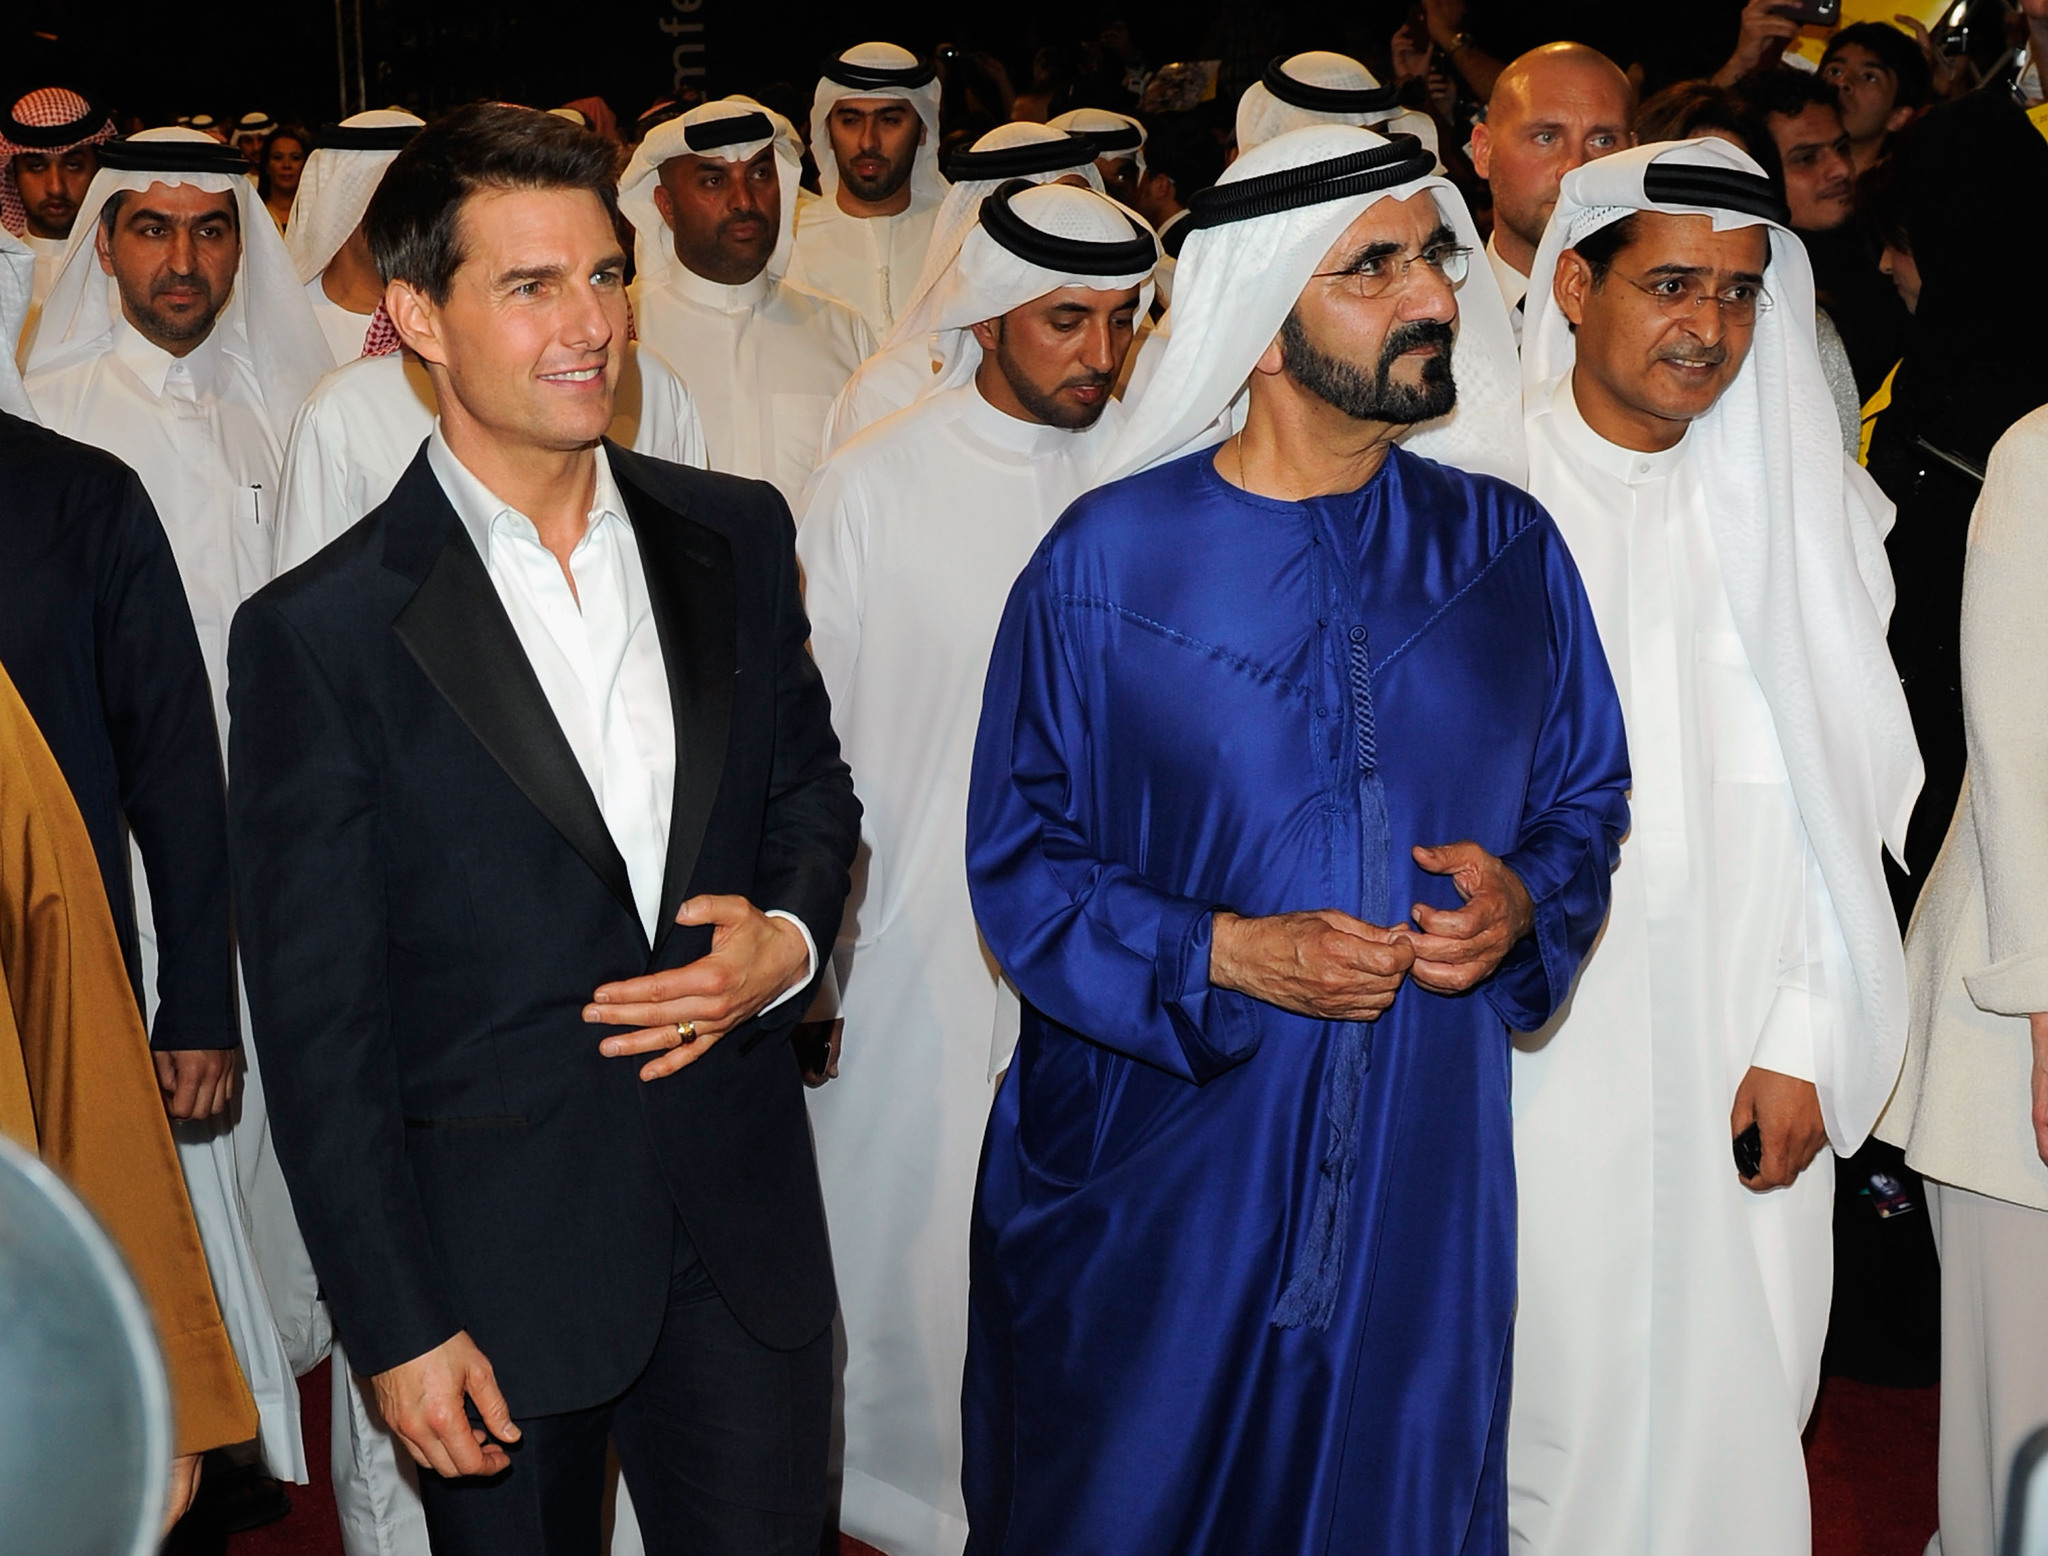 Tom Cruise and Sheikh Mohammed at event of Neimanoma misija. Smeklos protokolas (2011)